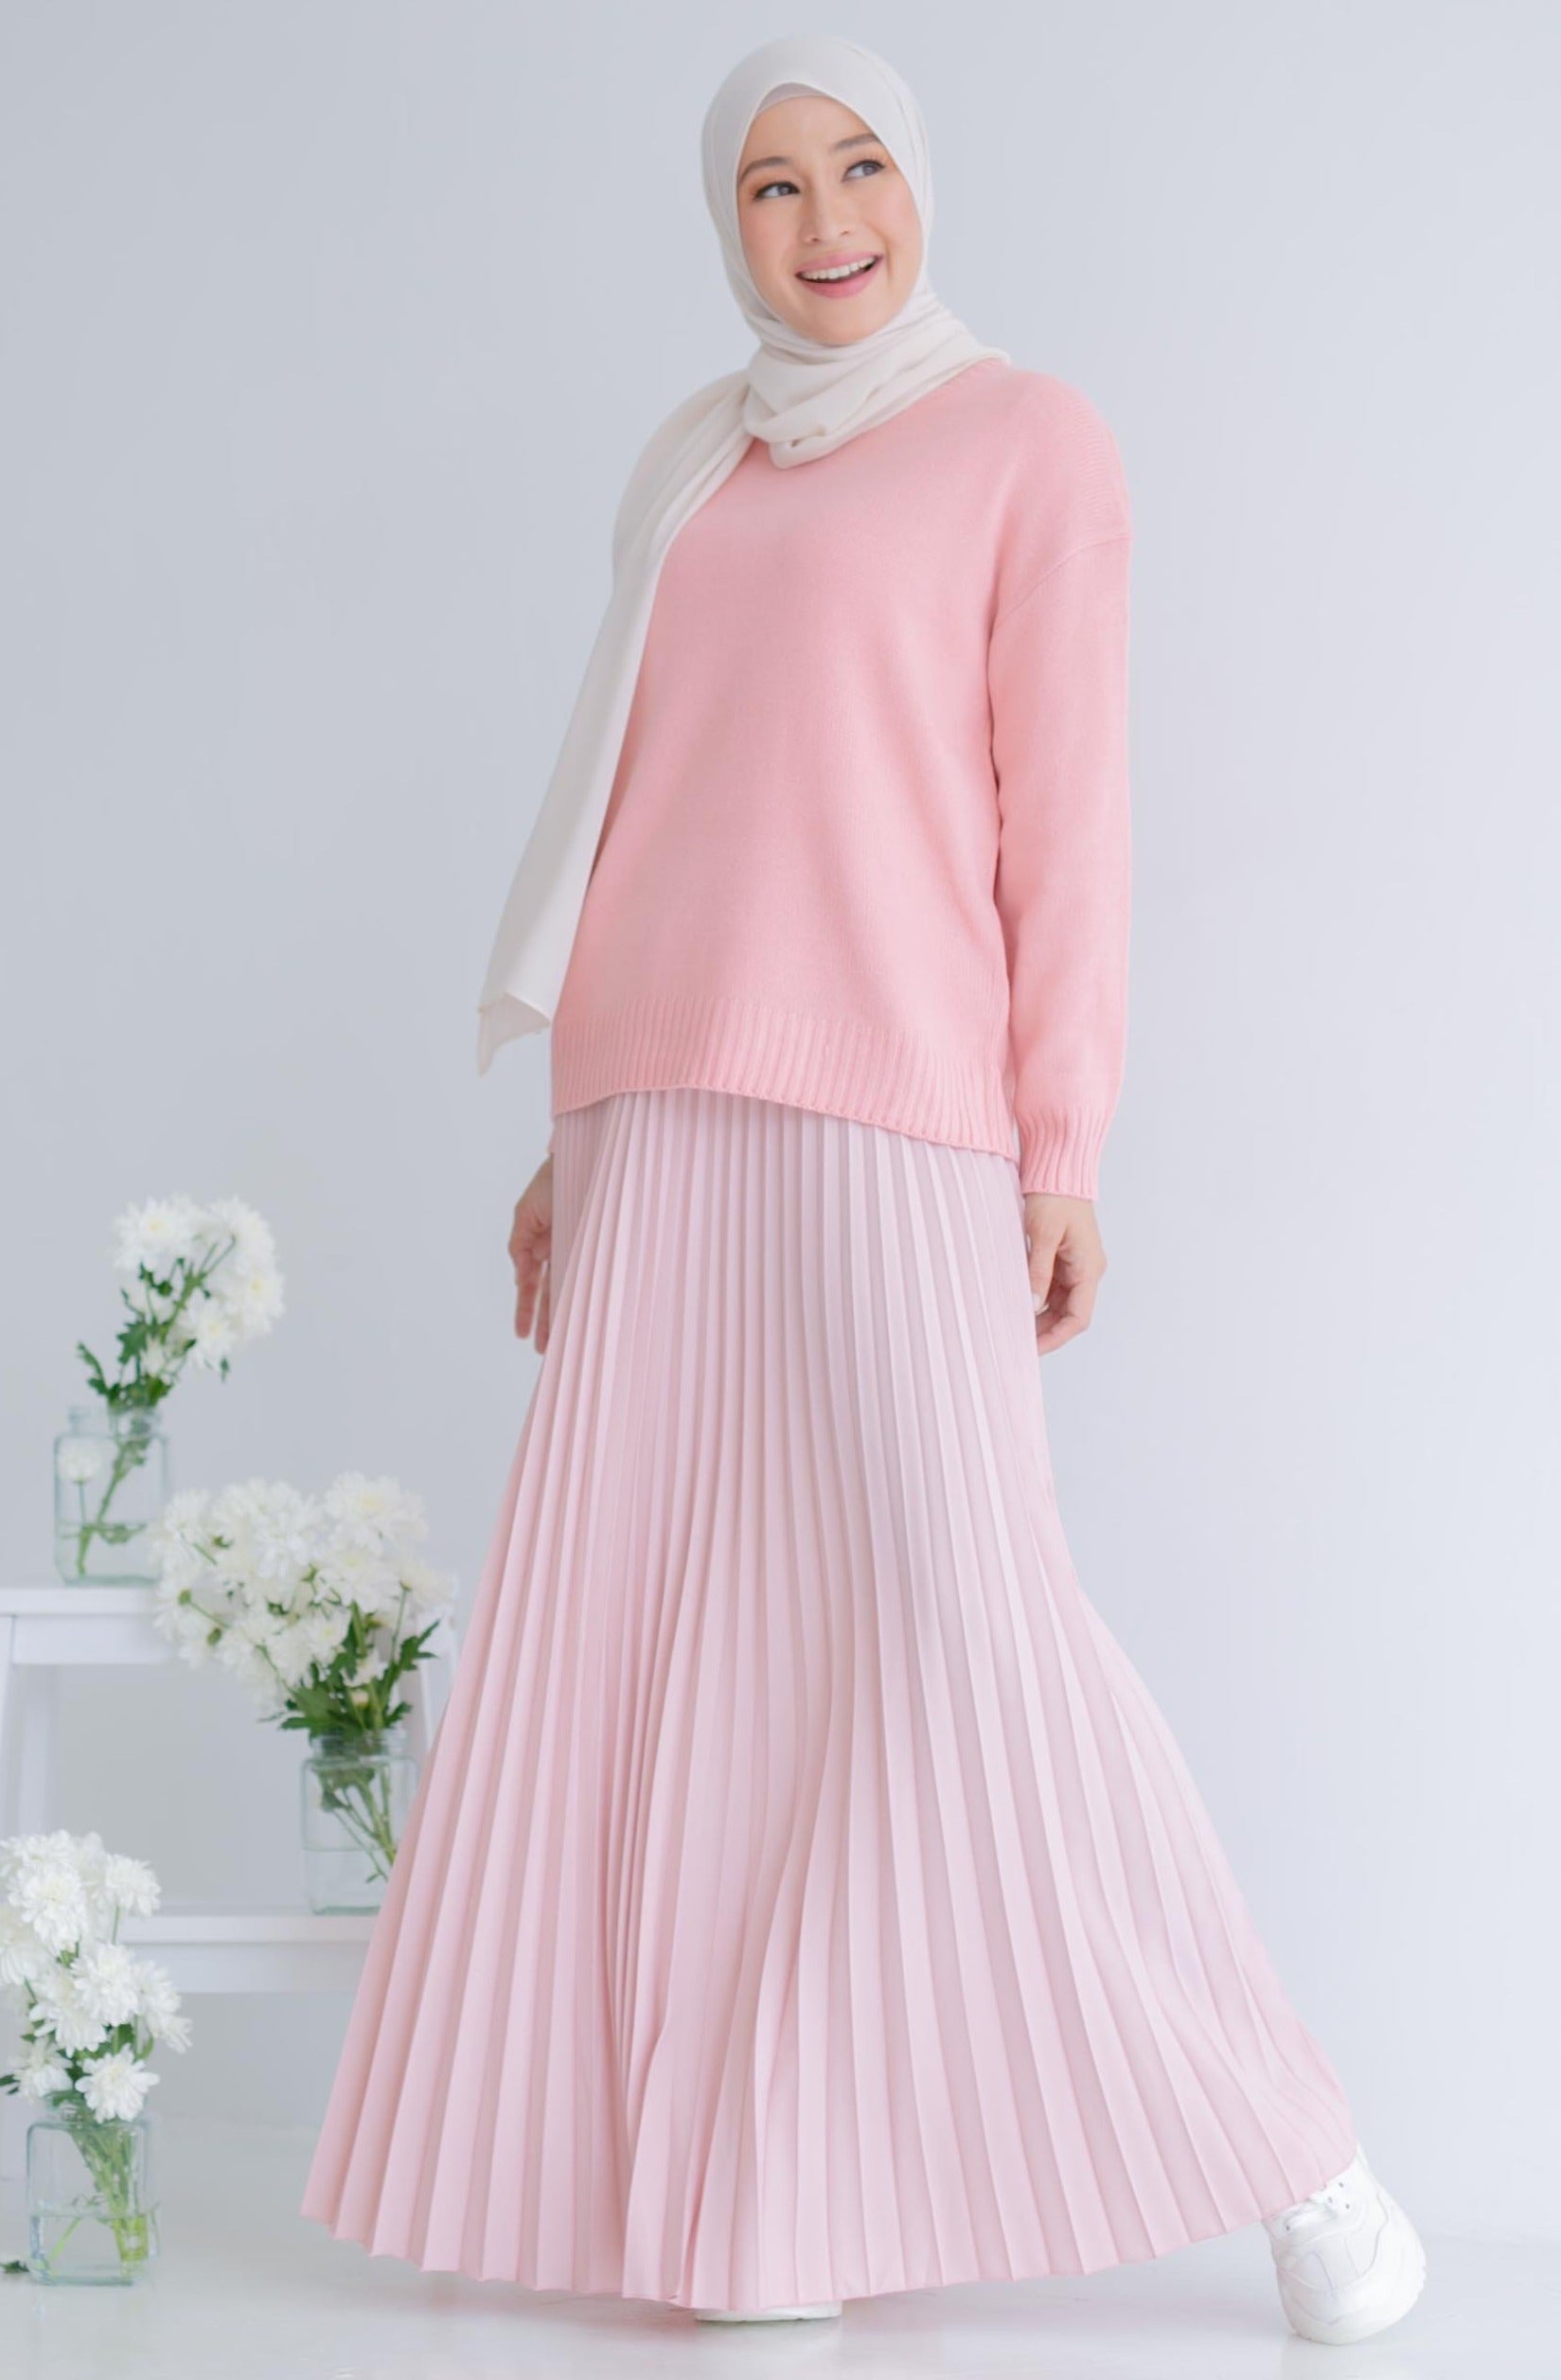 Harper Skirt in Pastel Pink